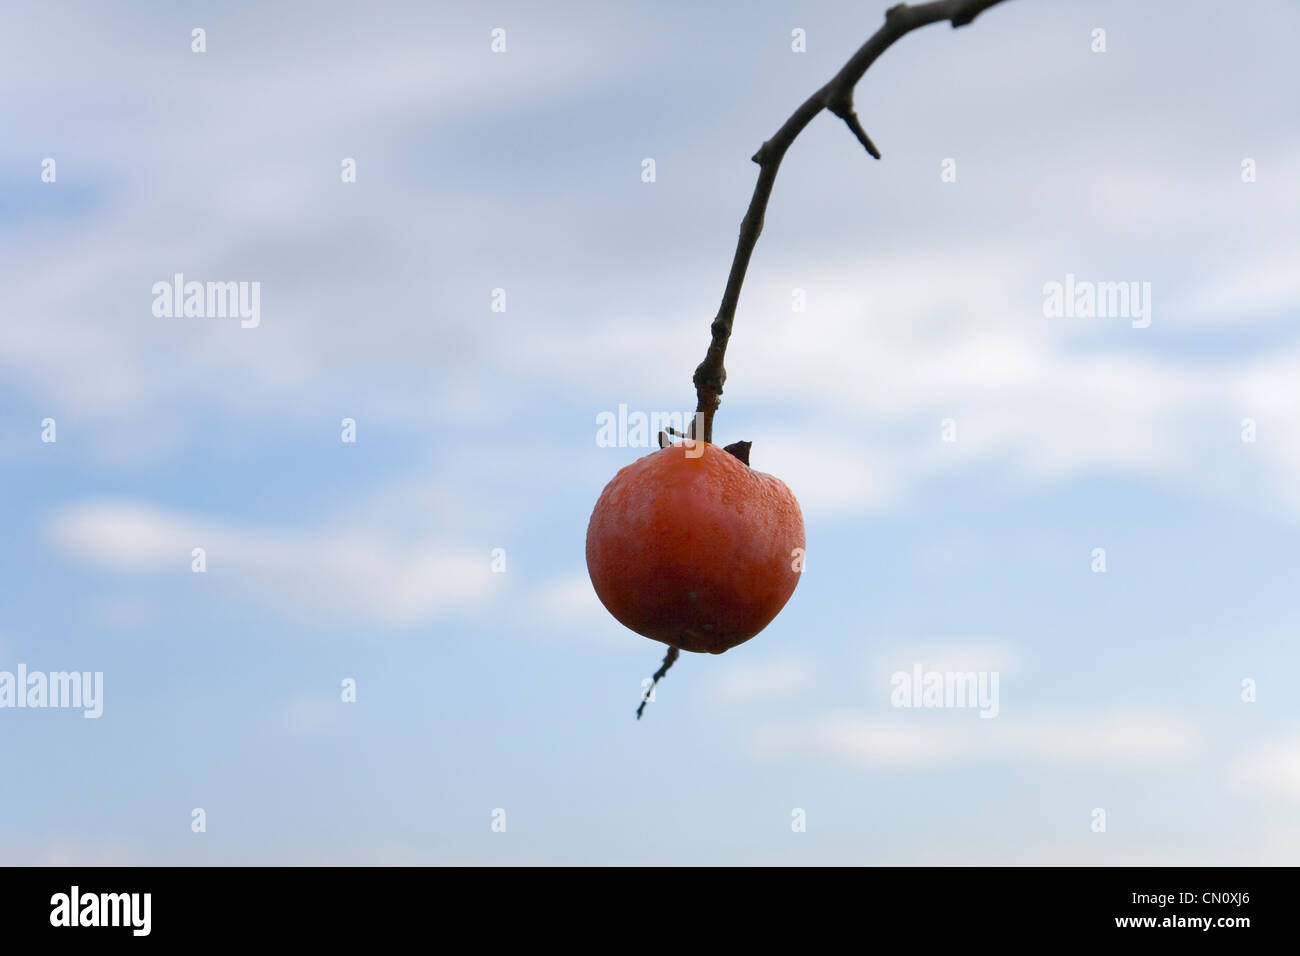 One persimmon fruit on a branch, Dalat, Vietnam Stock Photo